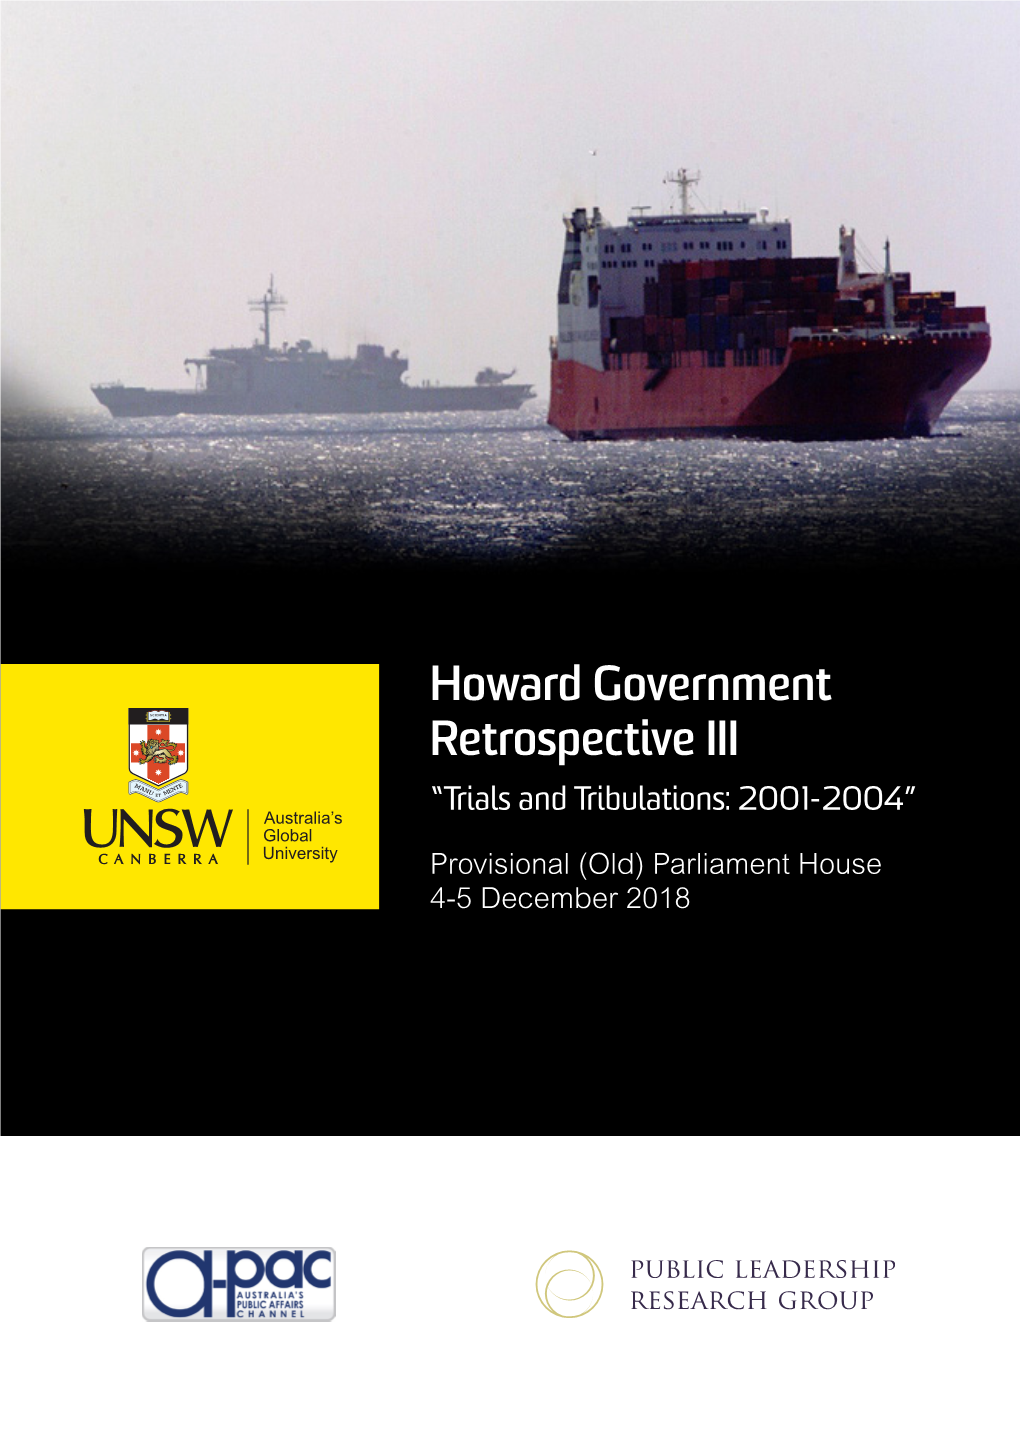 Howard Government Retrospective III “Trials and Tribulations: 2001-2004”